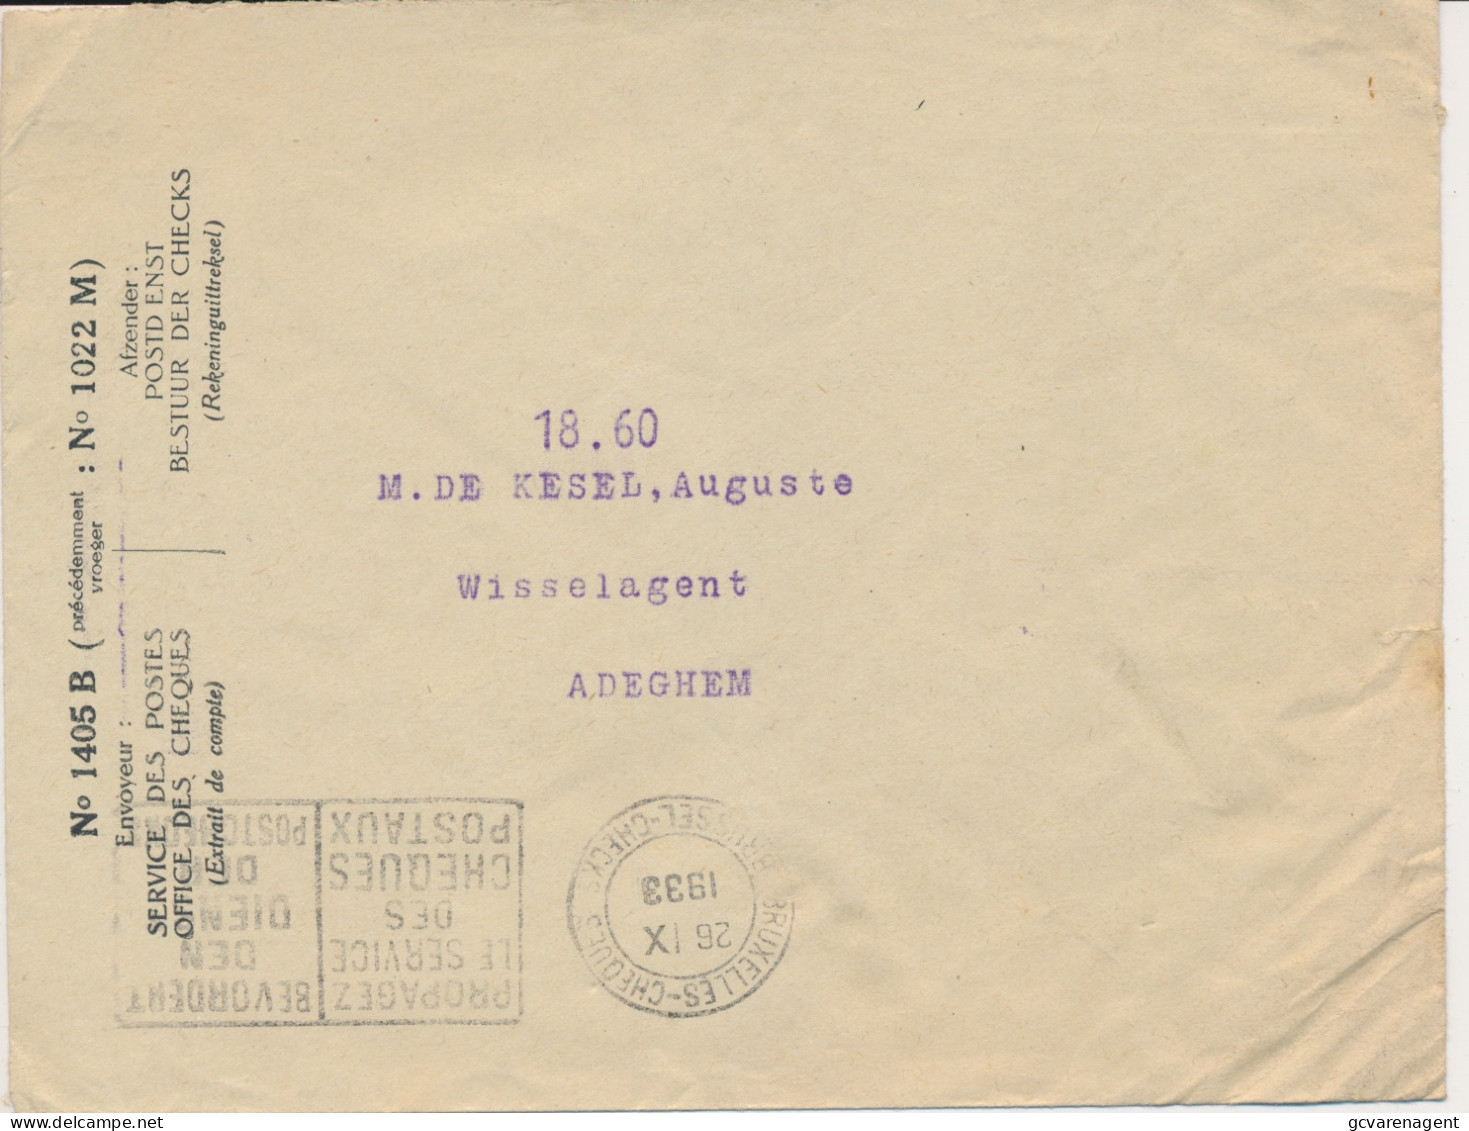 Old Envelope With Publicité 1933 Oostende - Dover , La Route Vers L'angleterre , De Weg Naar Engeland.    Farde - Covers